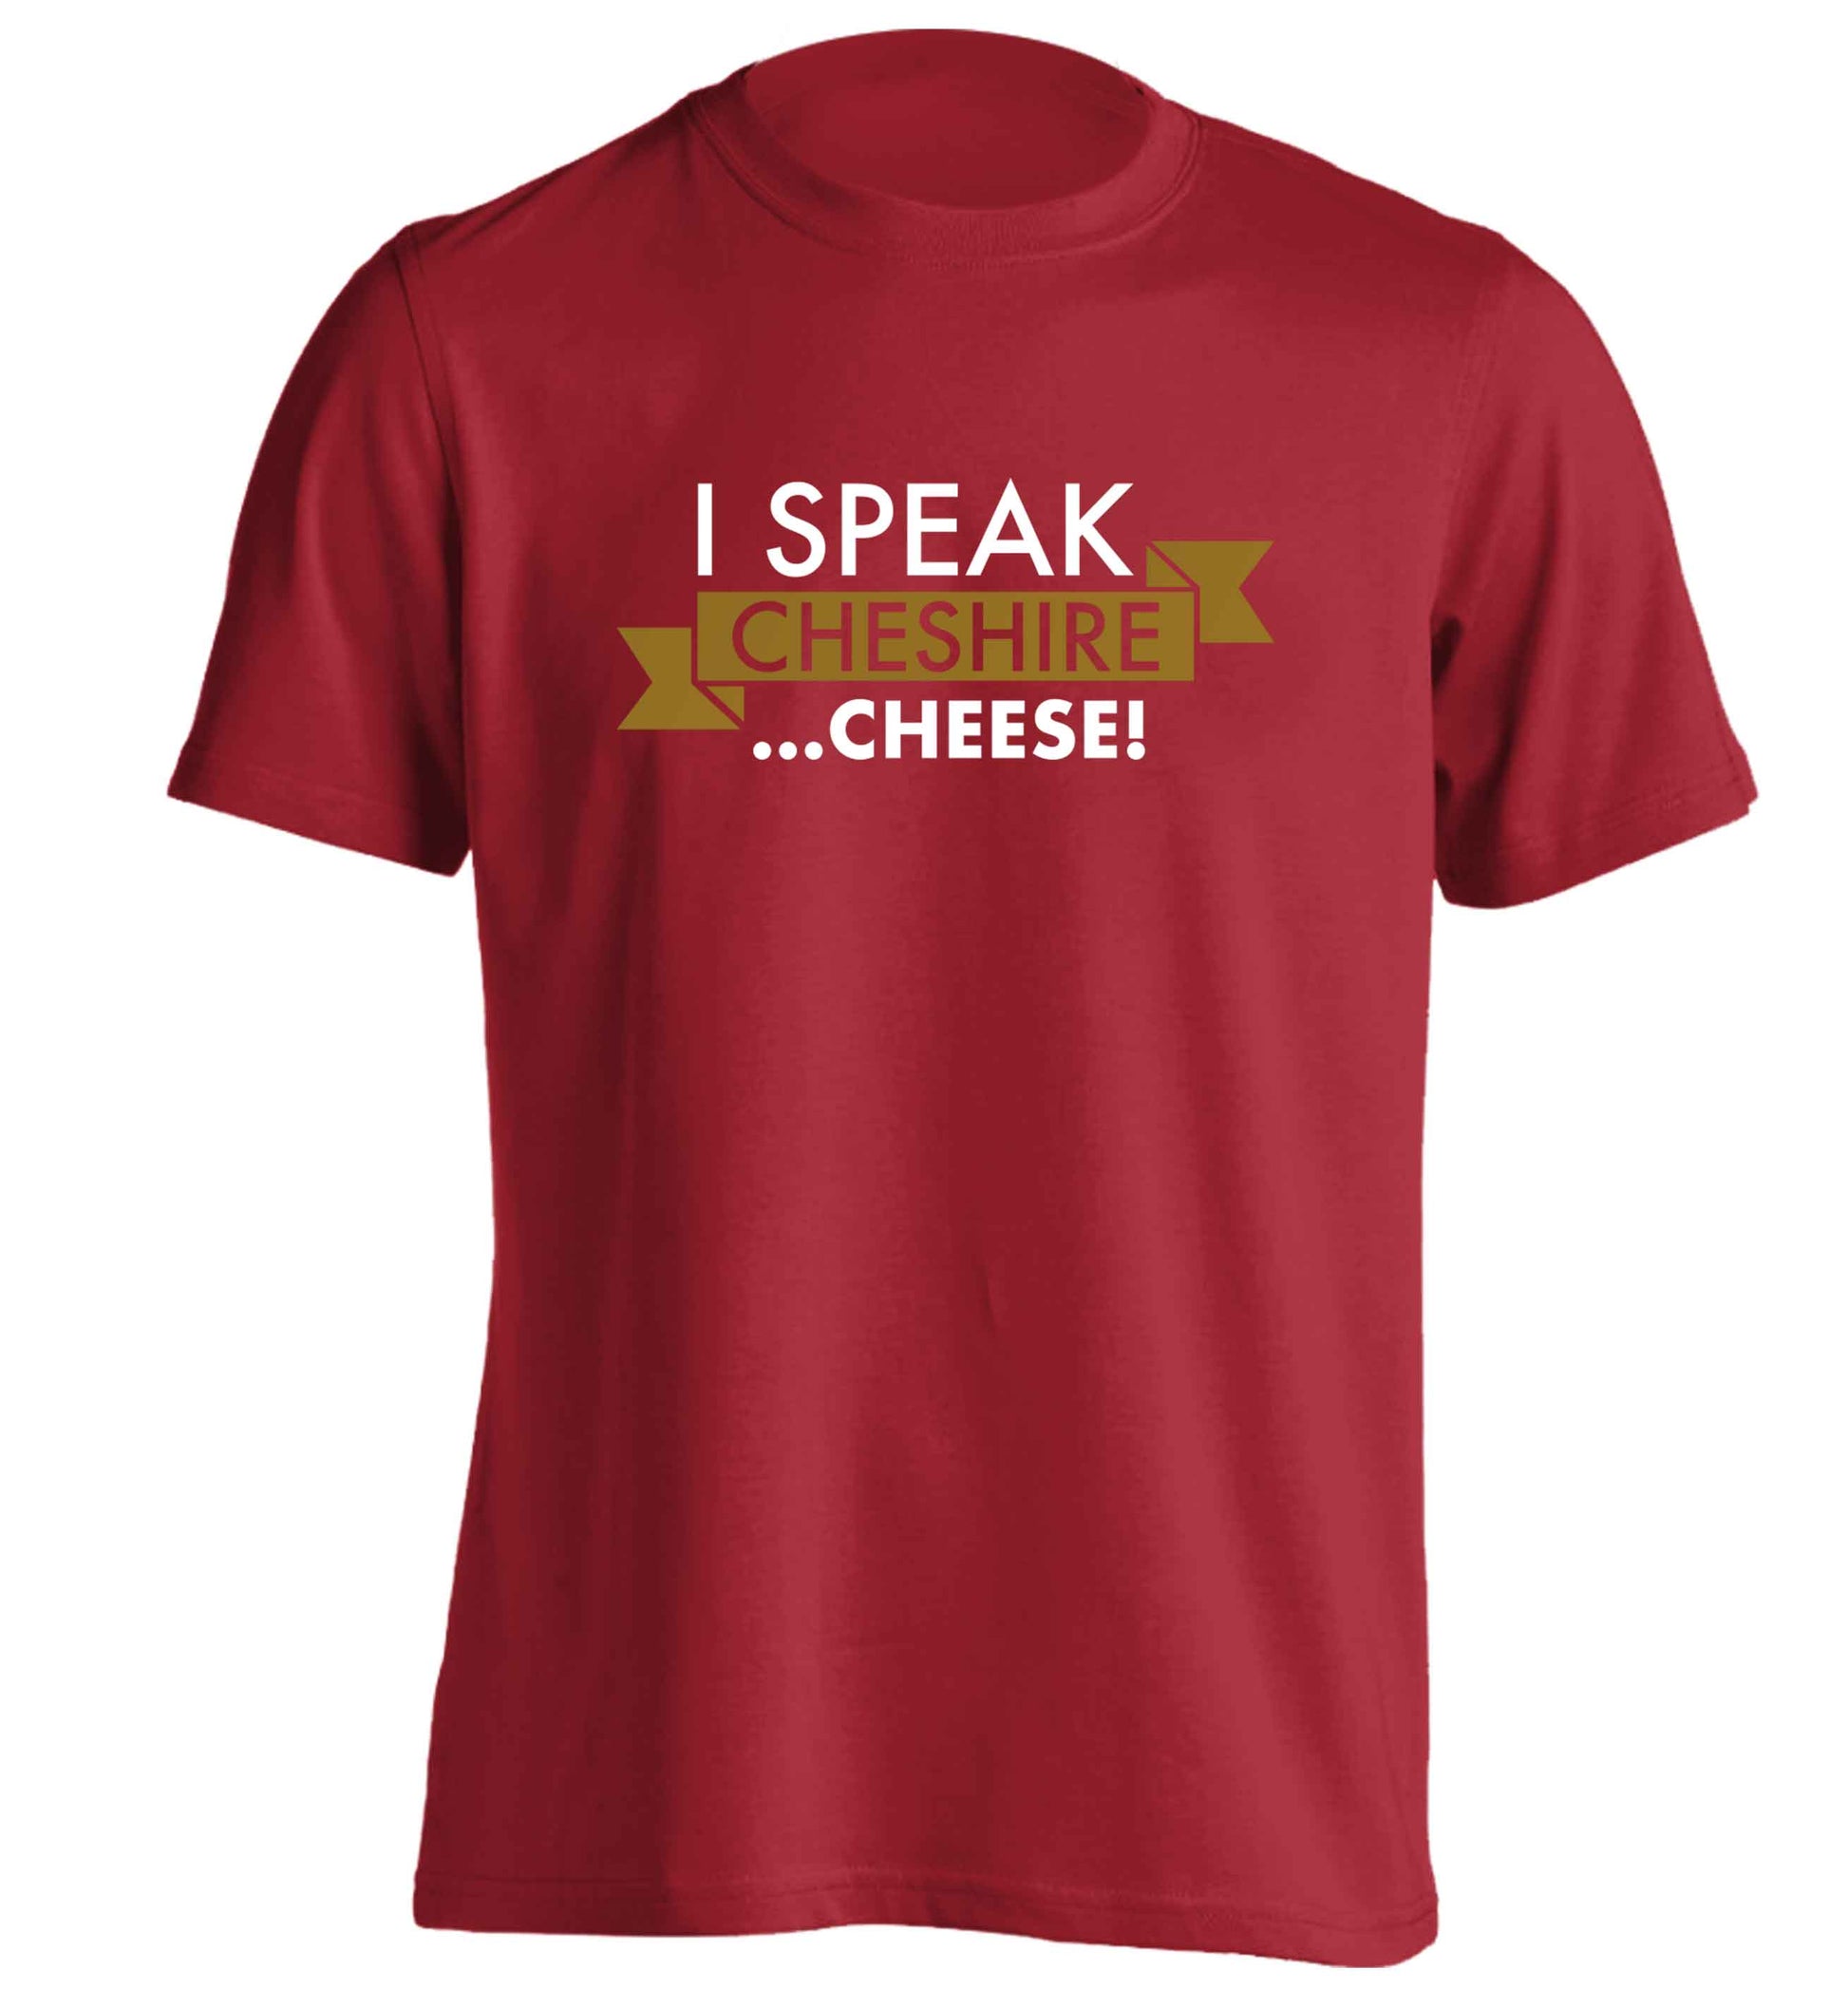 I speak Cheshire cheese adults unisex red Tshirt 2XL